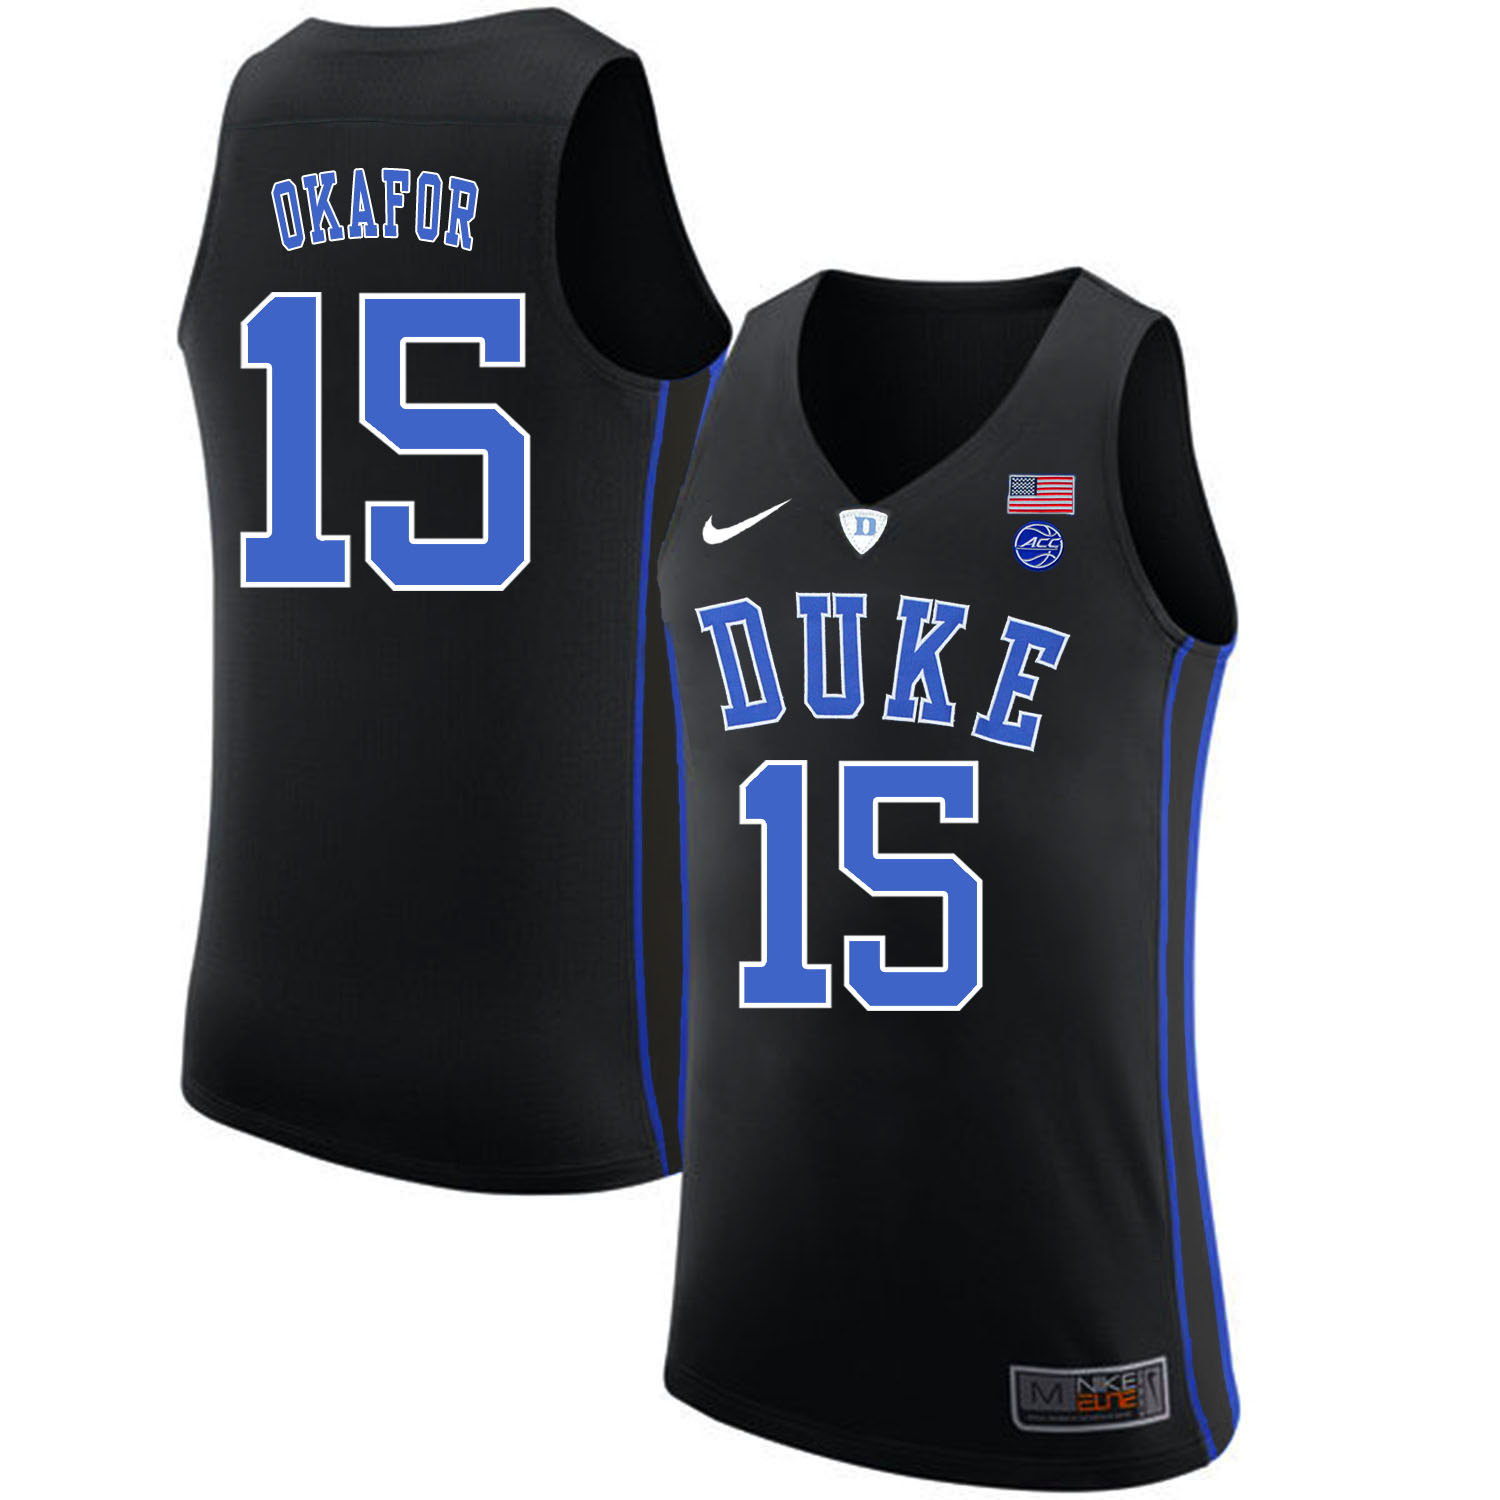 Duke Blue Devils 15 Jahlil Okafor Black College Basketball Jersey